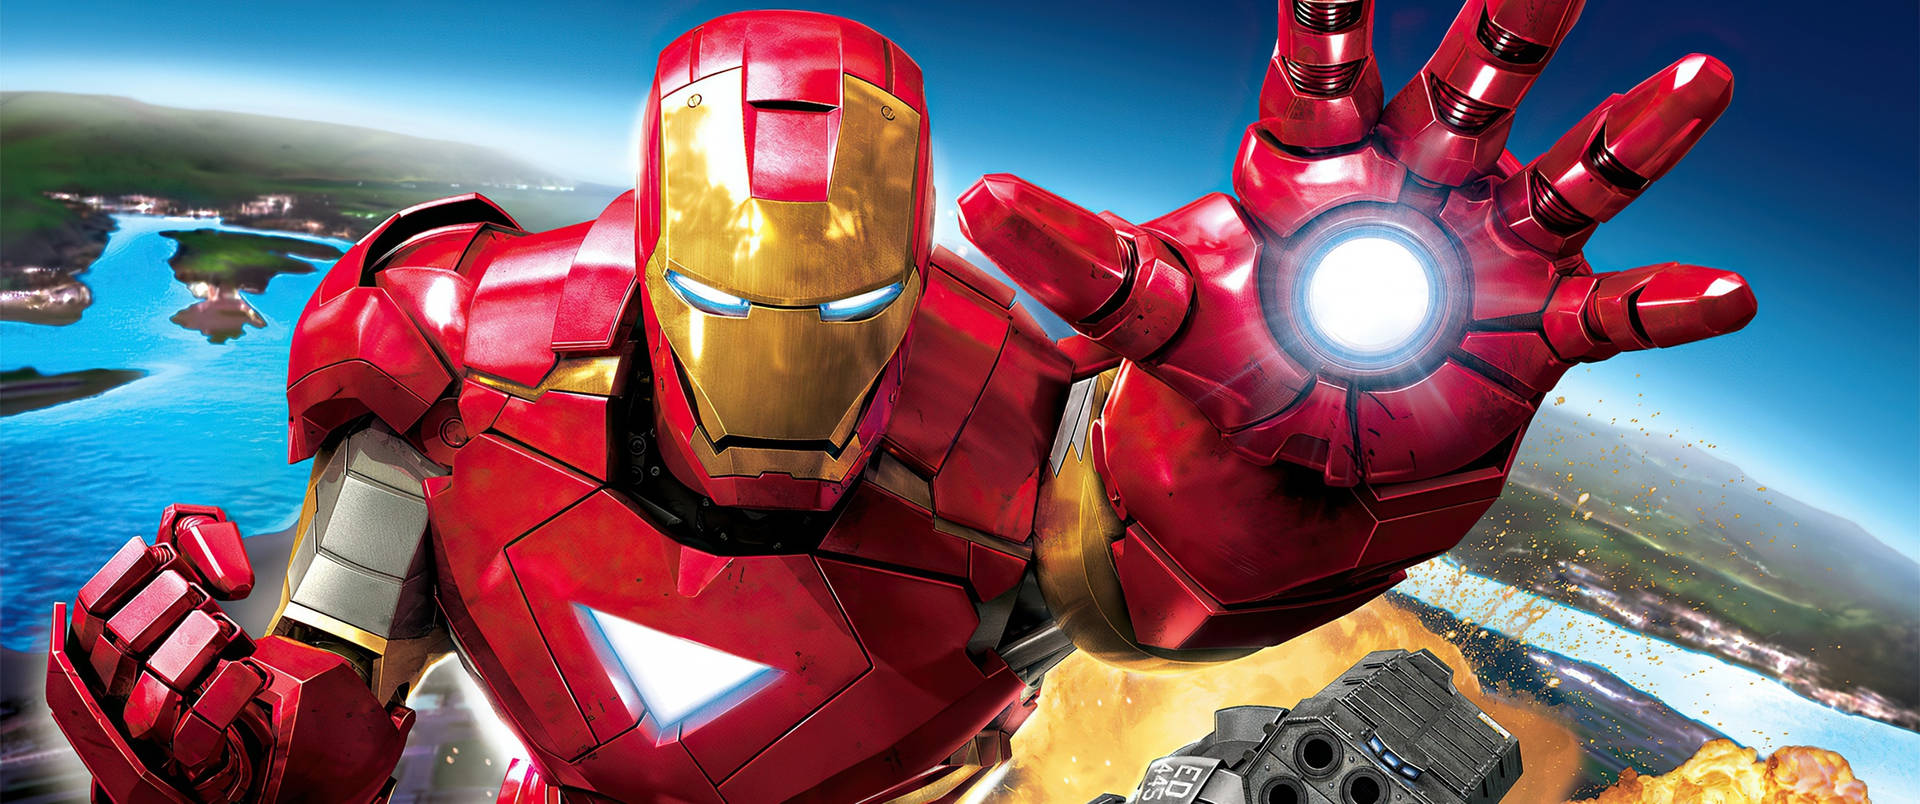 Ironman Superheld 2010 Film Wallpaper